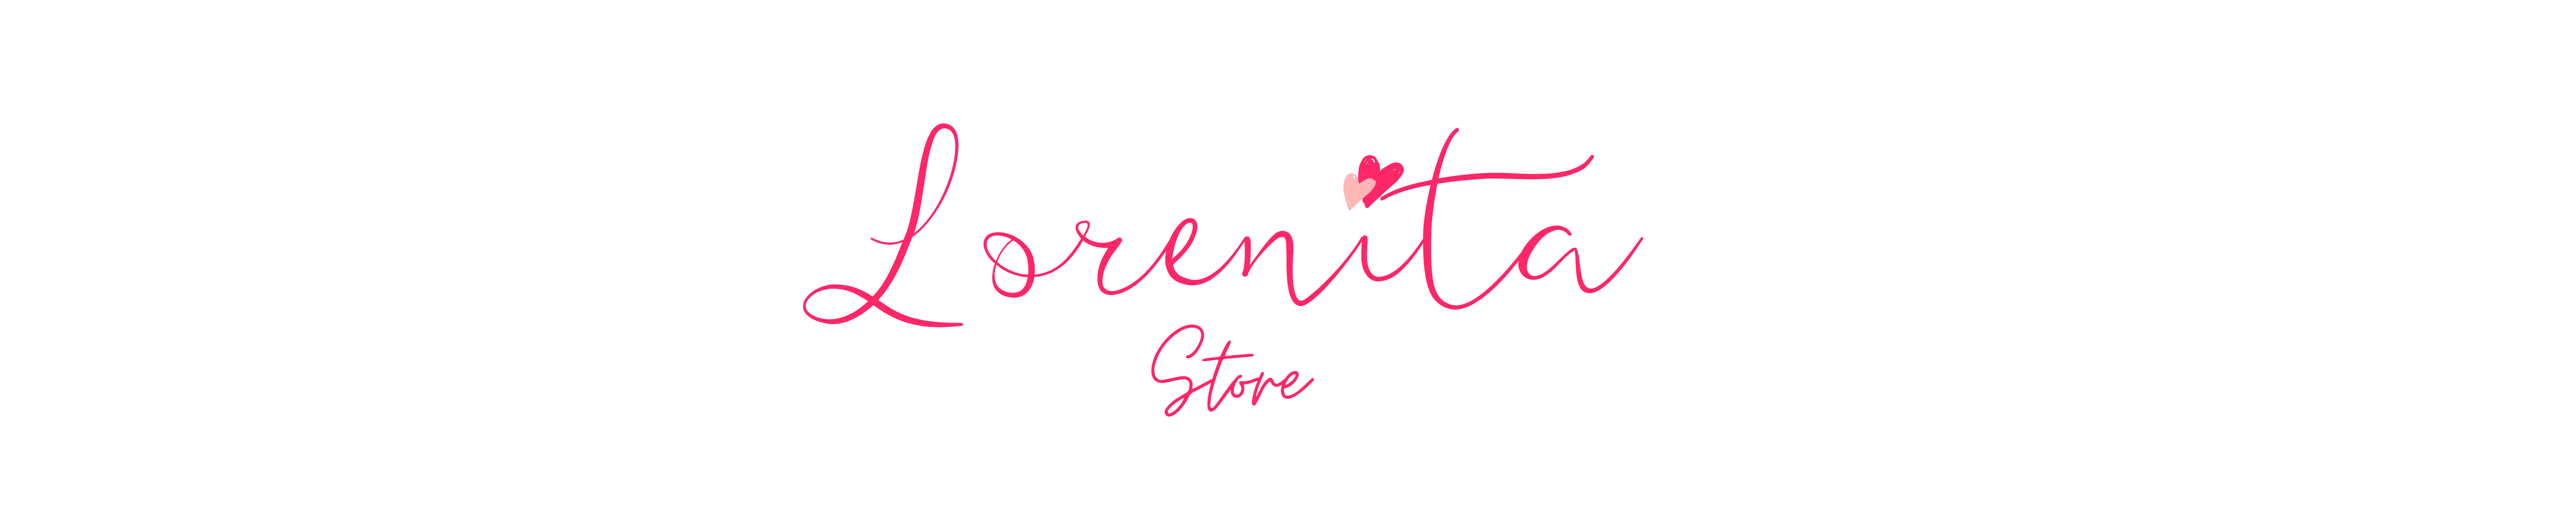 Lorenita Store